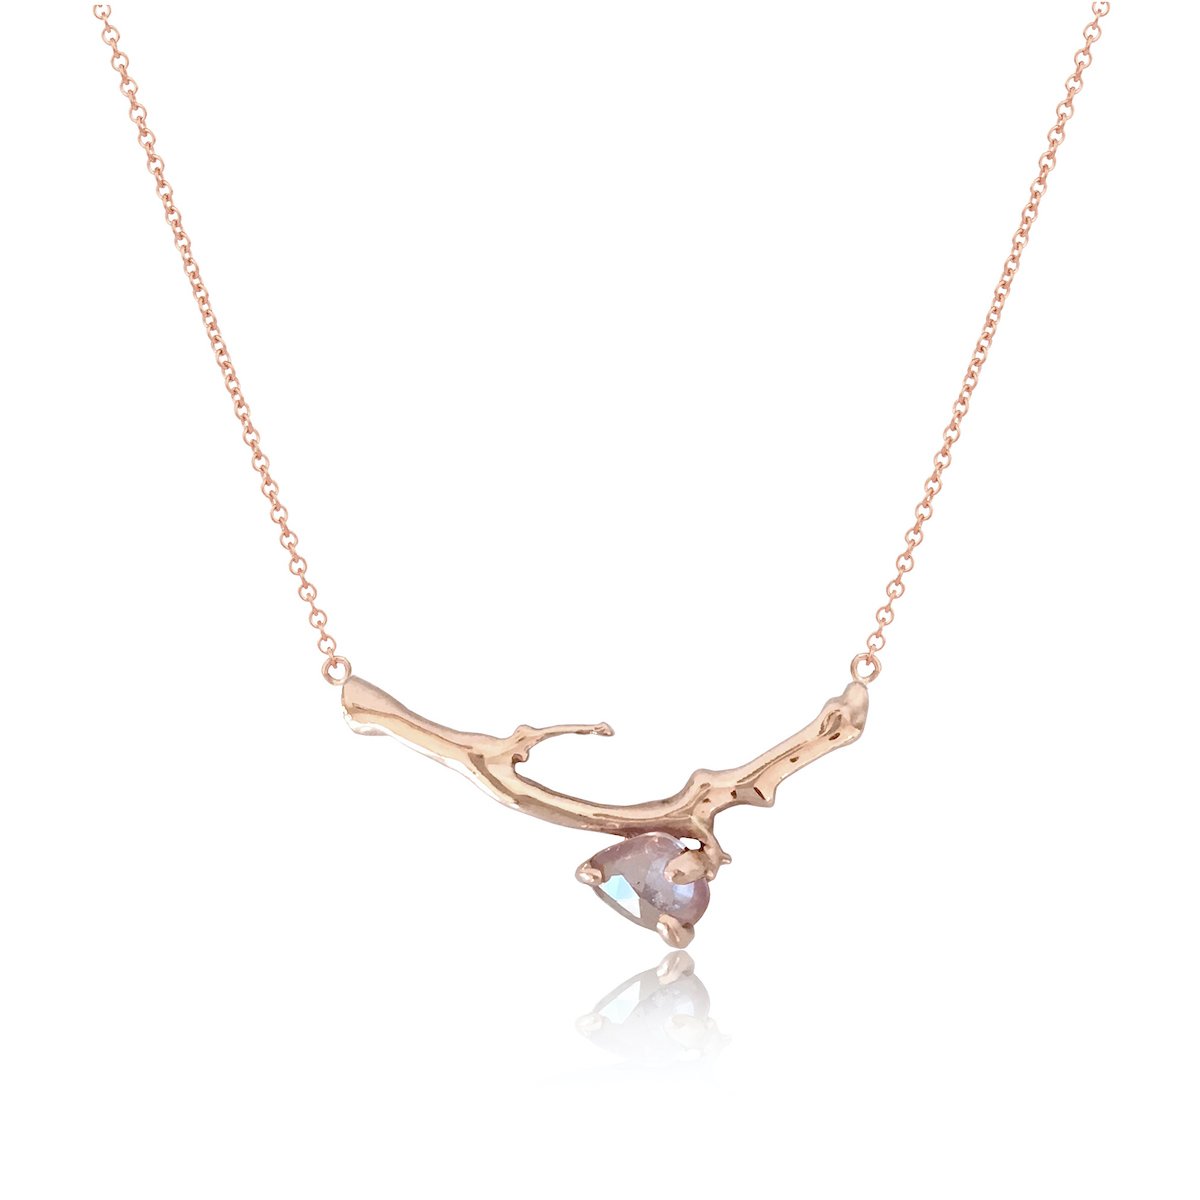 Brandts Jewellery cherry twig necklace rose gold with rose cut ceylon sapphire - Ayshe Brandts.jpg